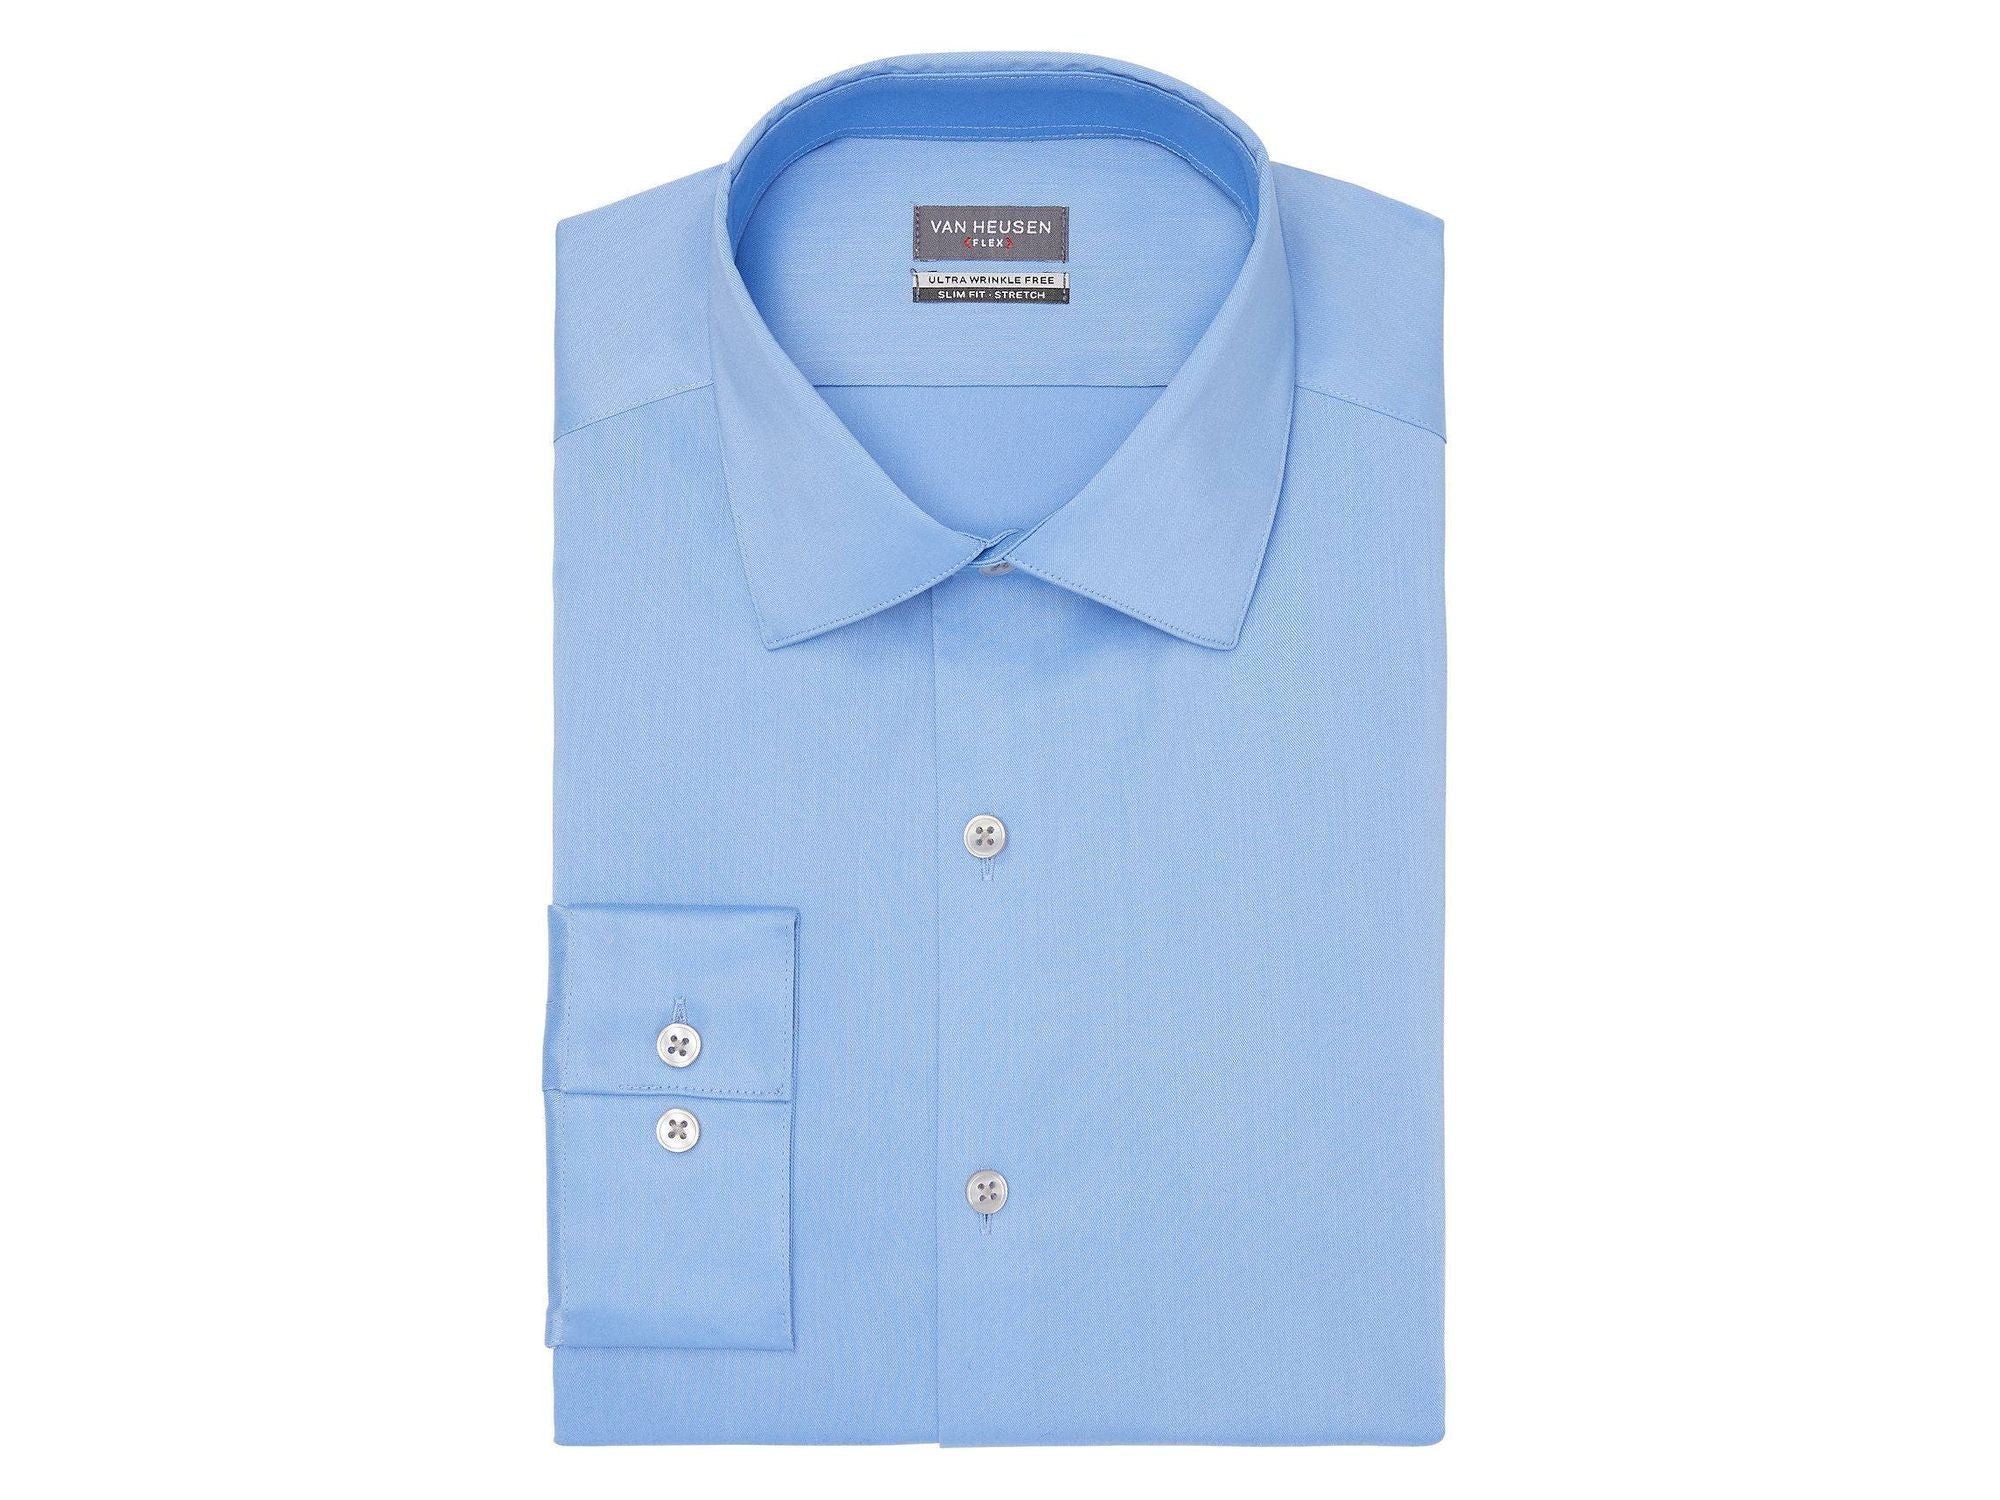 Van Heusen Regular Fit Ultra Wrinkle Free Stretch FLEX Solid Dress Shirt in Blue Frost - Rainwater's Men's Clothing and Tuxedo Rental